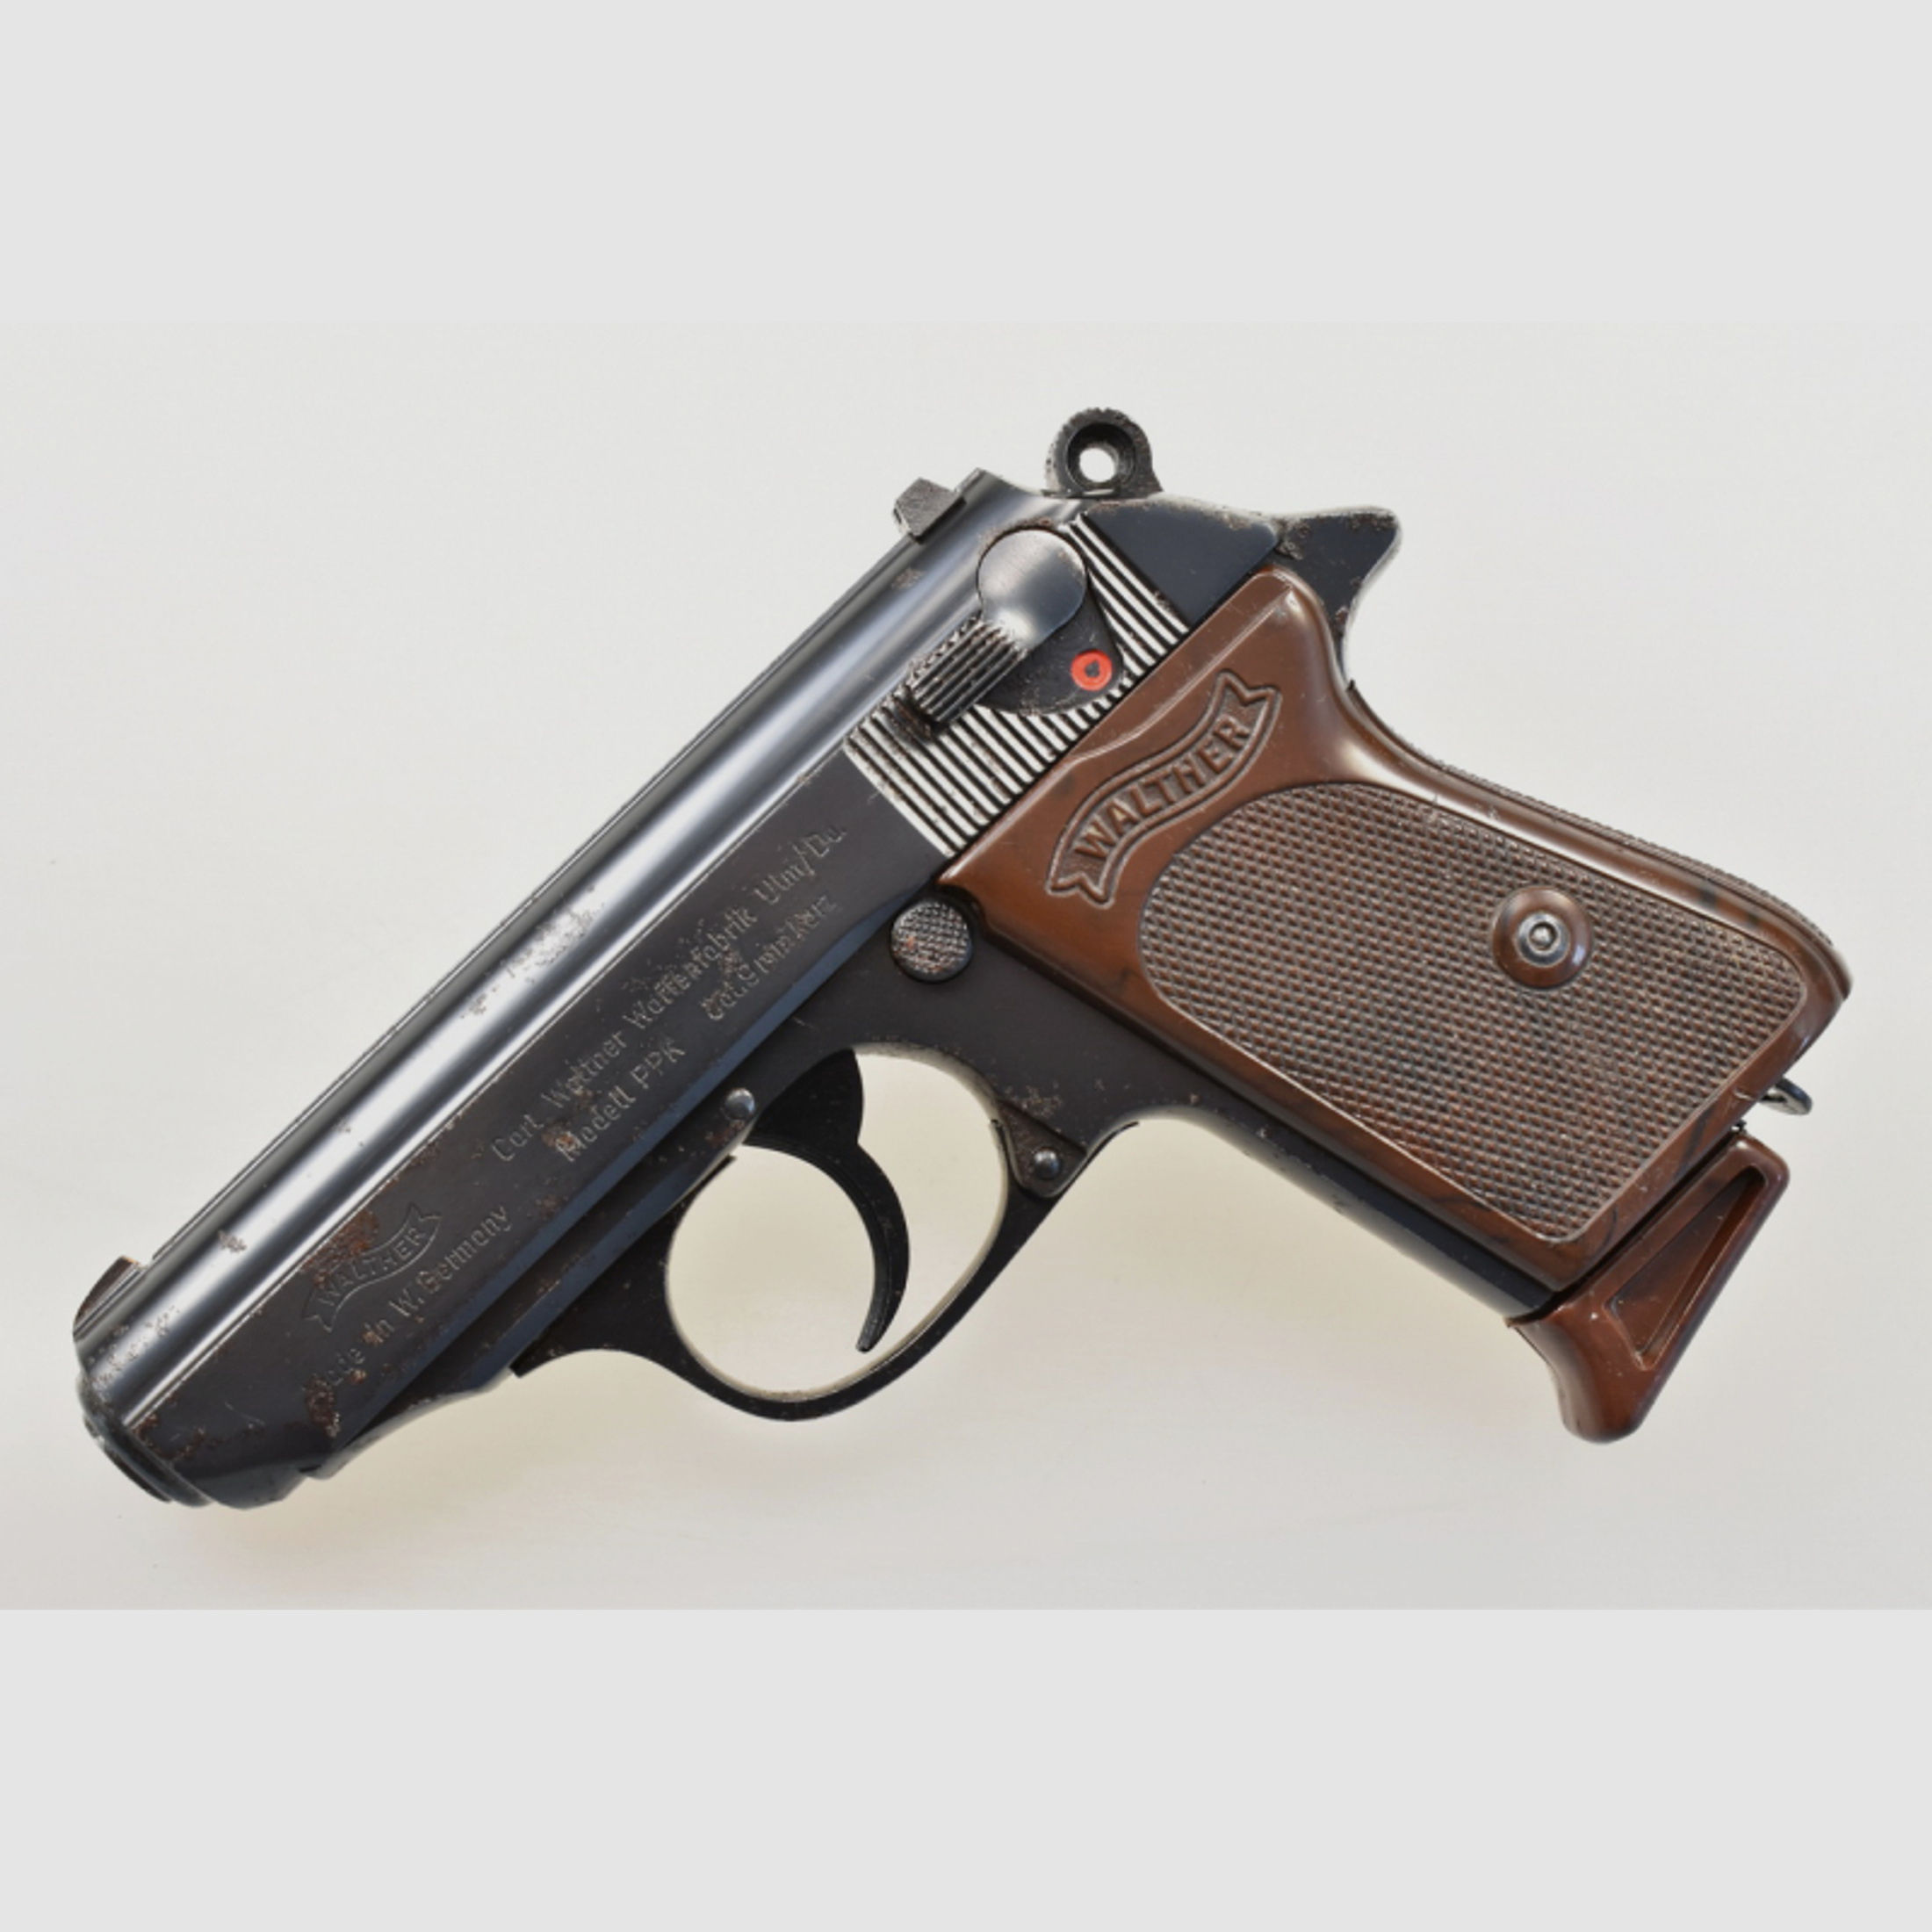 WALTHER / ULM Pistole Modell PPK im Kaliber 9mm Browning kurz / .380 ACP